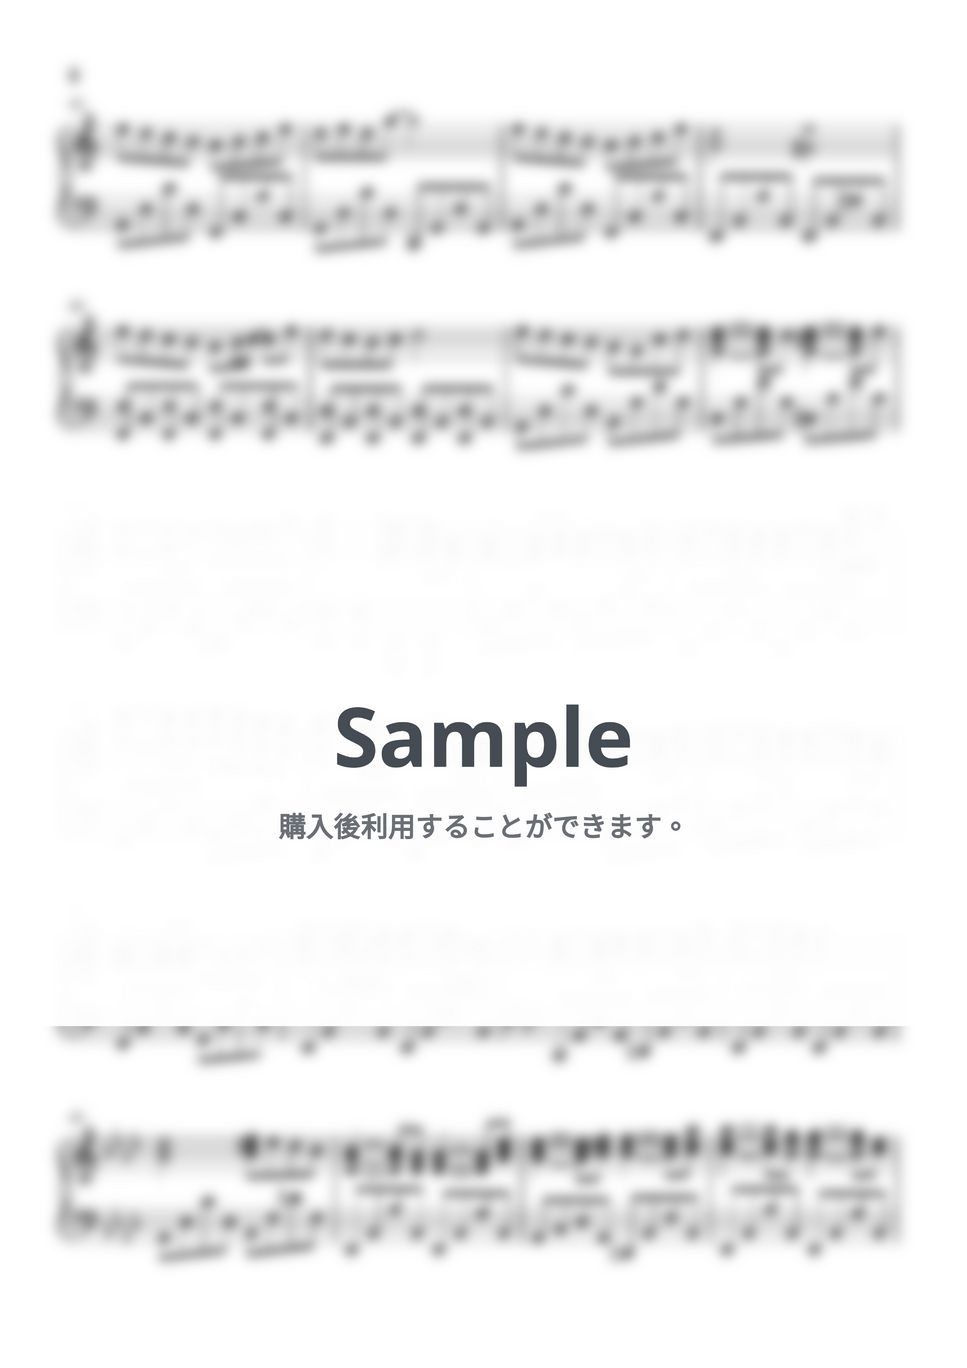 Linked Horizon - Shinzou wo Sasageyo (Attack on Titan) by Piano Go Life